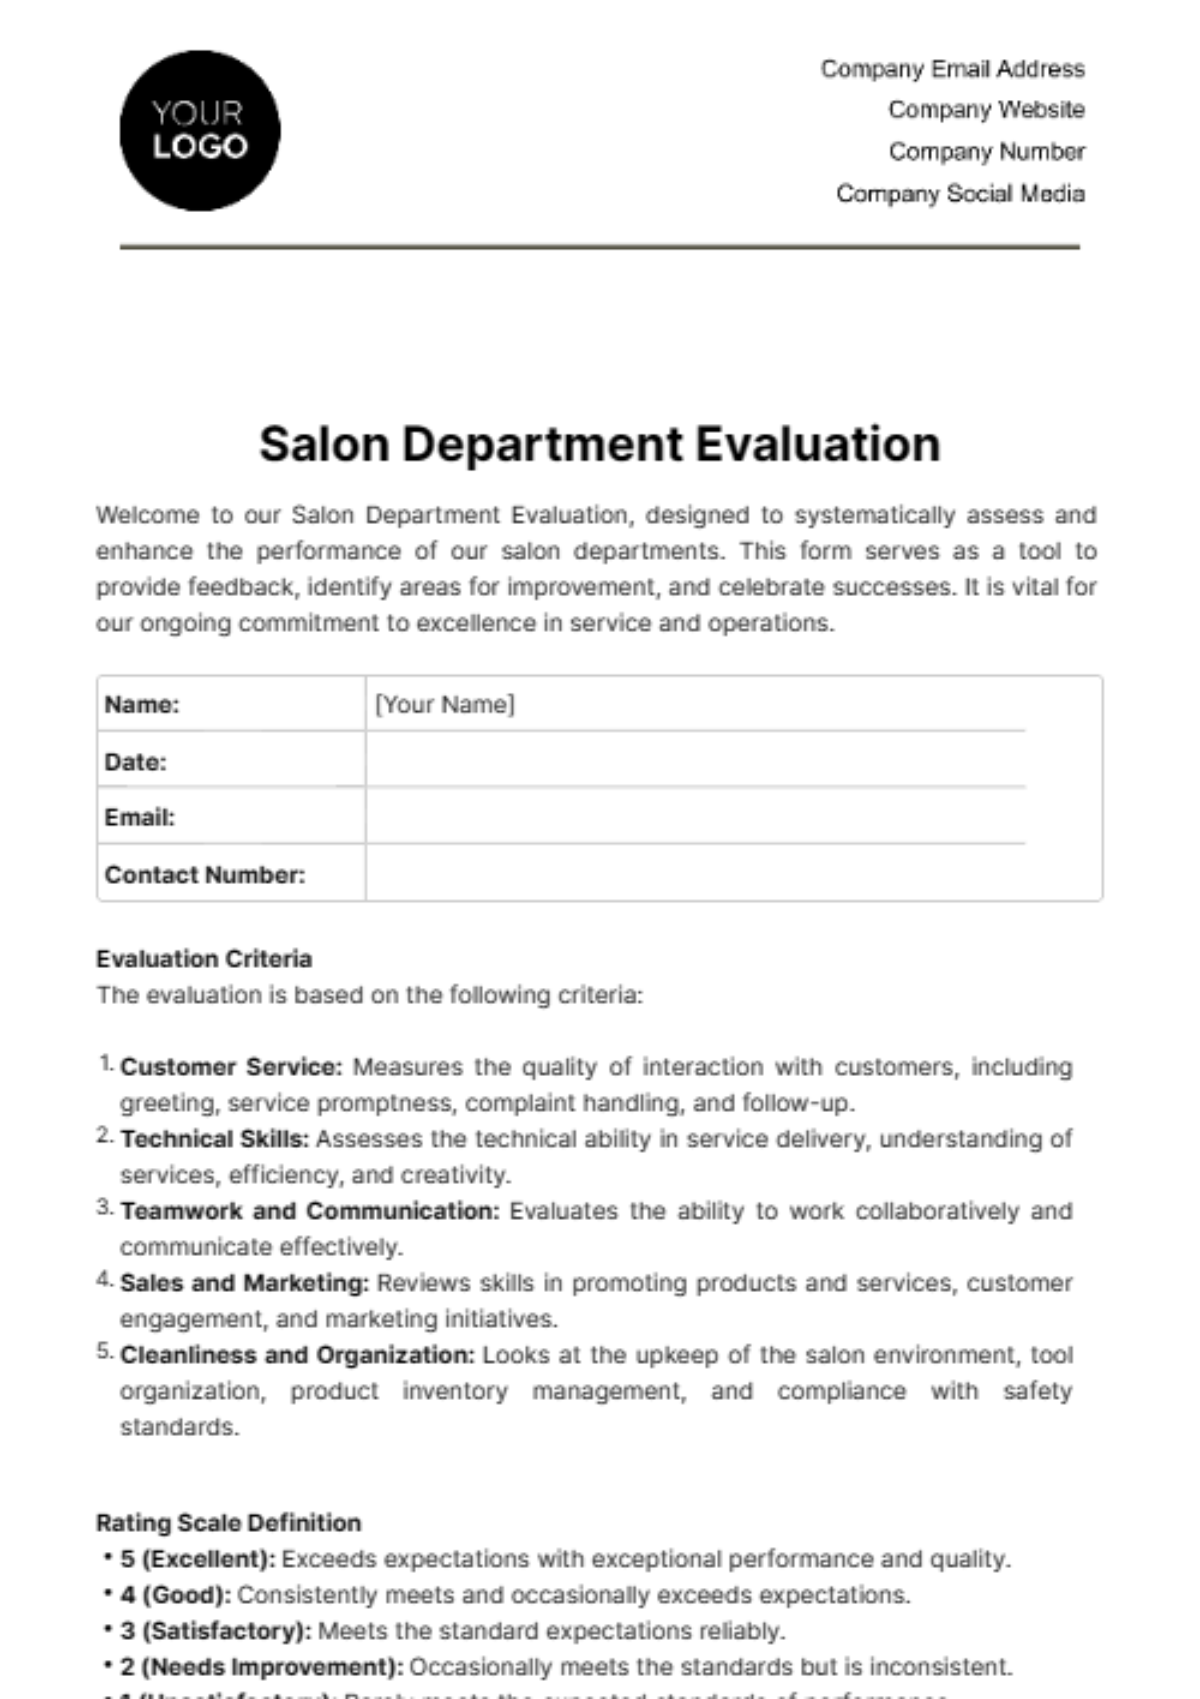 Salon Department Evaluation Template